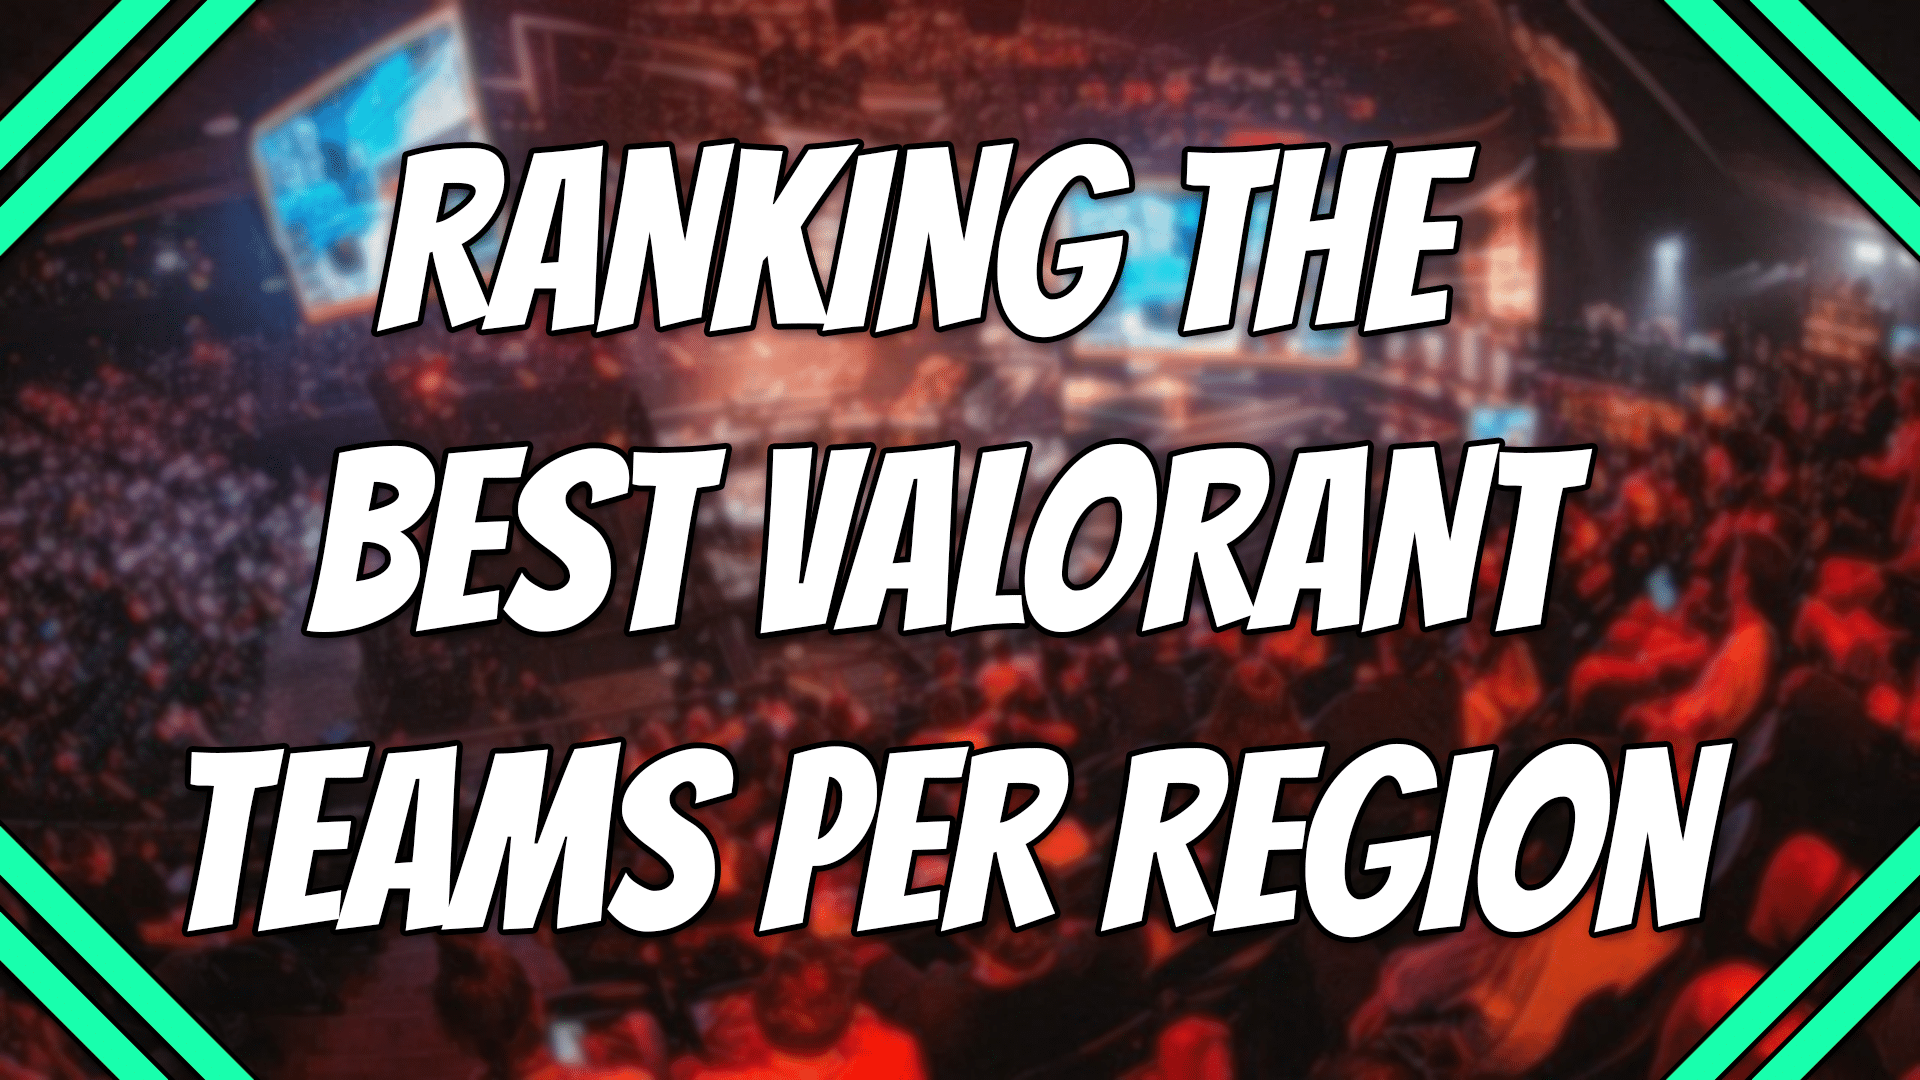 Ranking the best Valorant teams per region title card